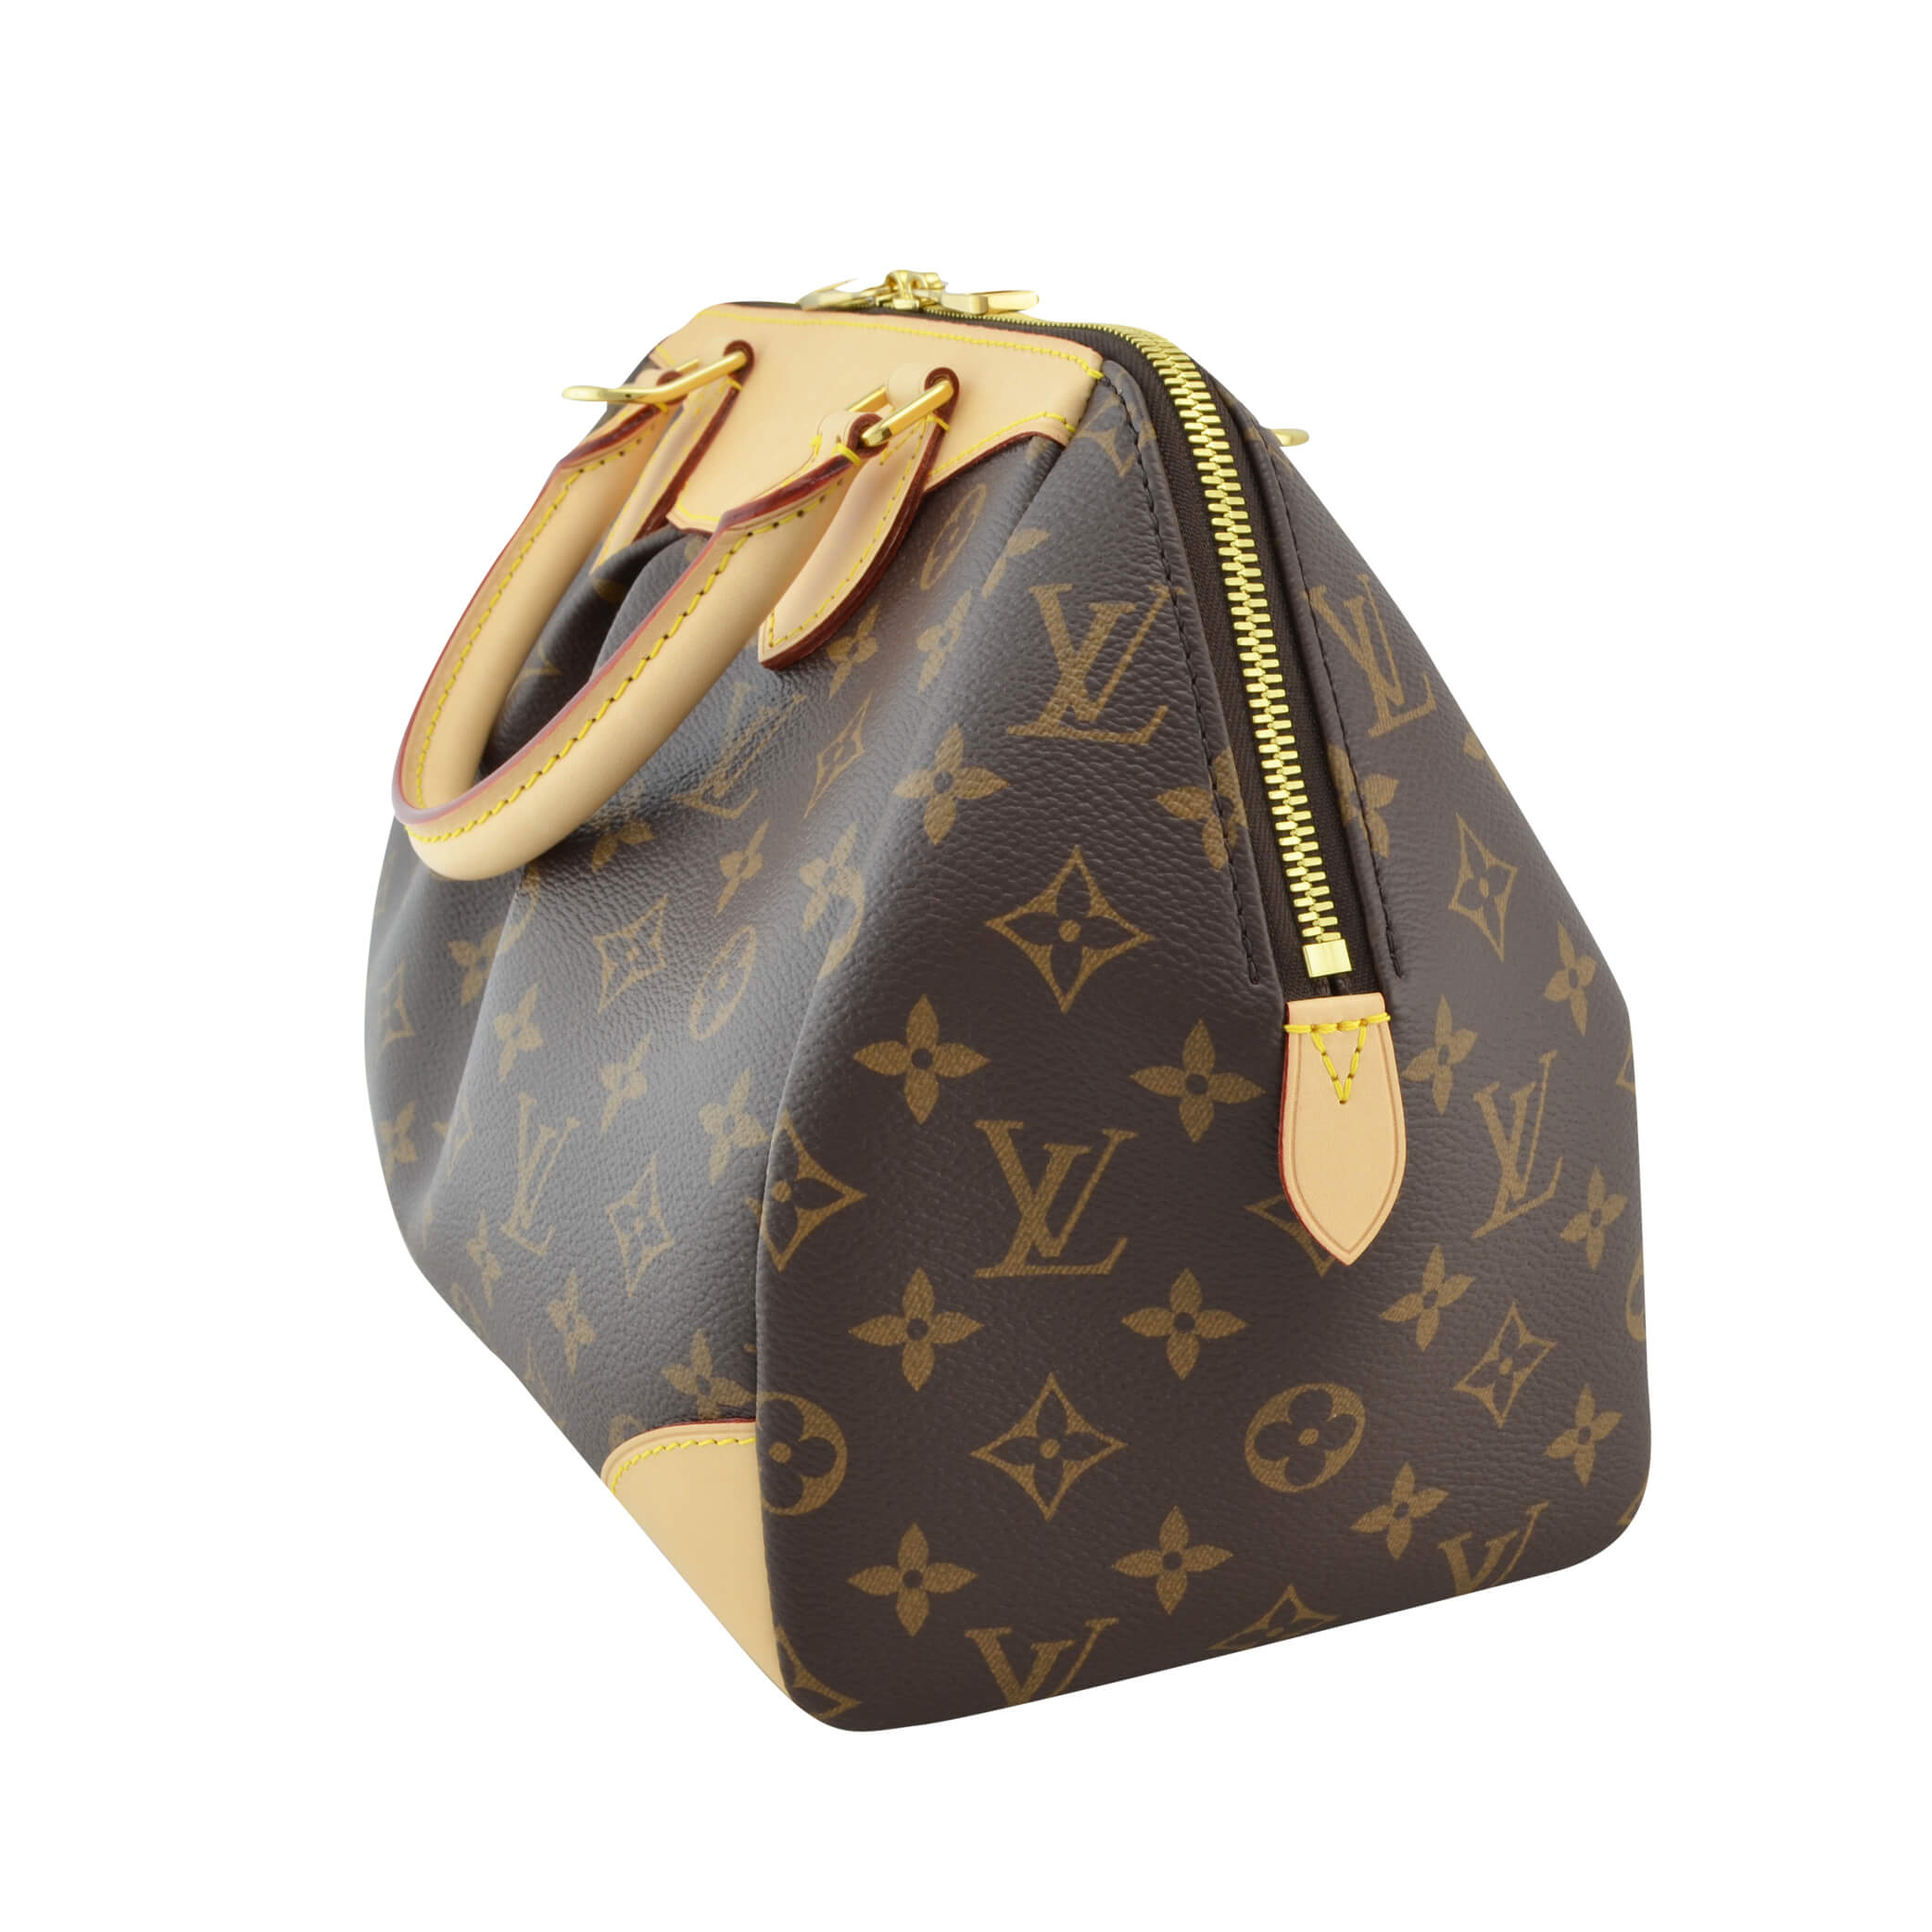 Louis Vuitton Segur Handtasche Second Hand - MyLovelyBoutique .com